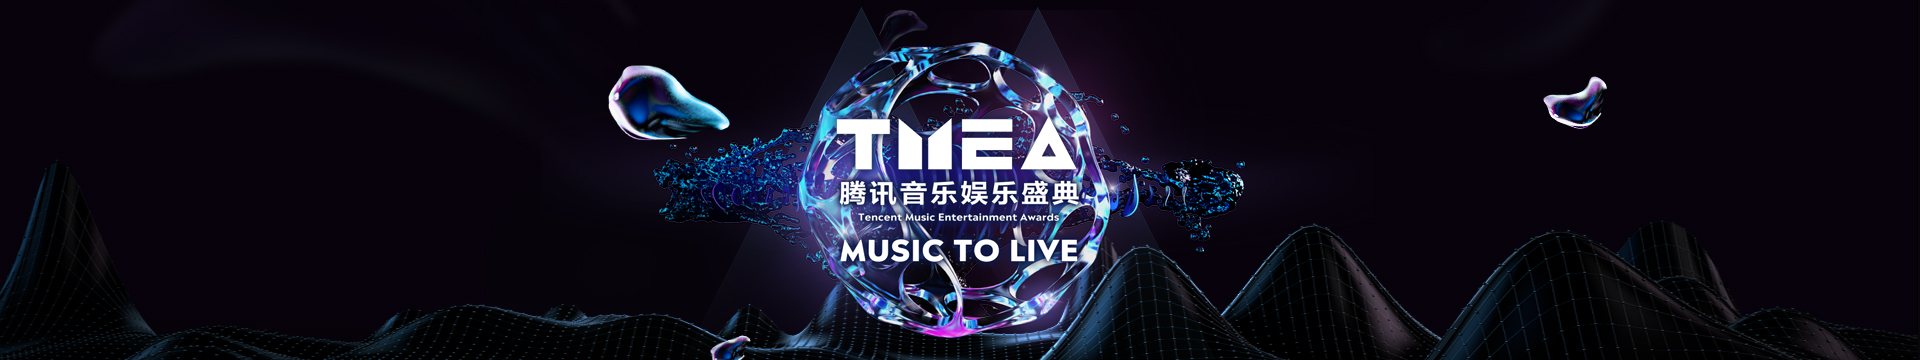 TMEA(Tencent Music Entertainment Awards)